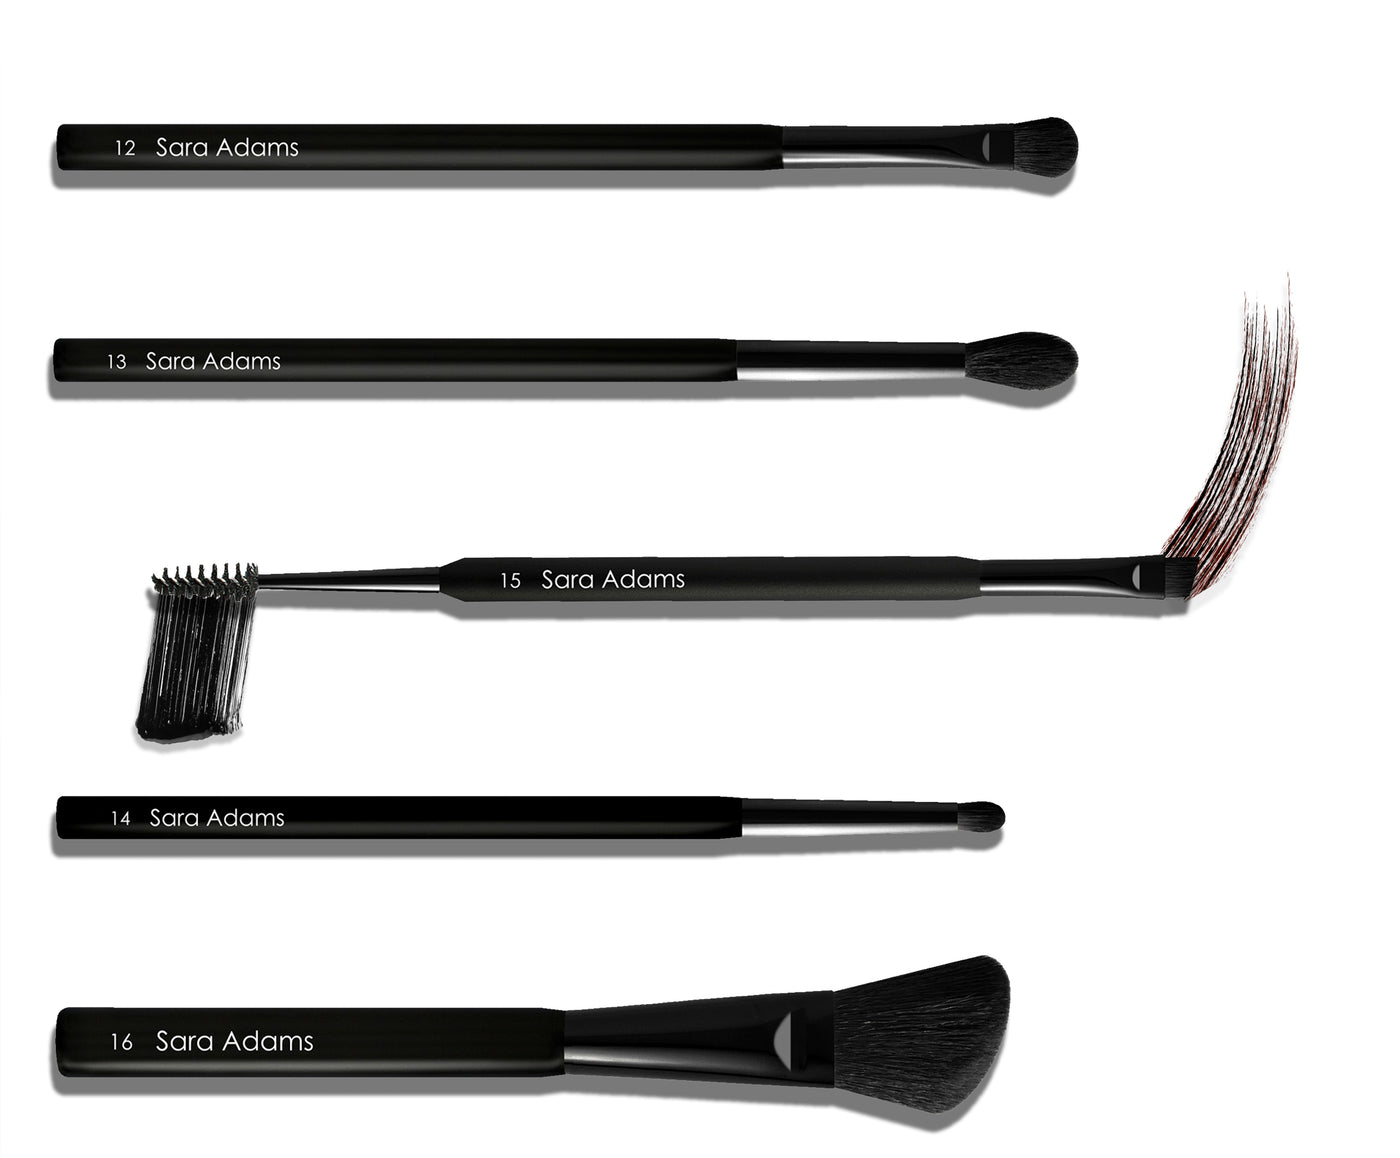 sara adams cosmetiques makeup brushes